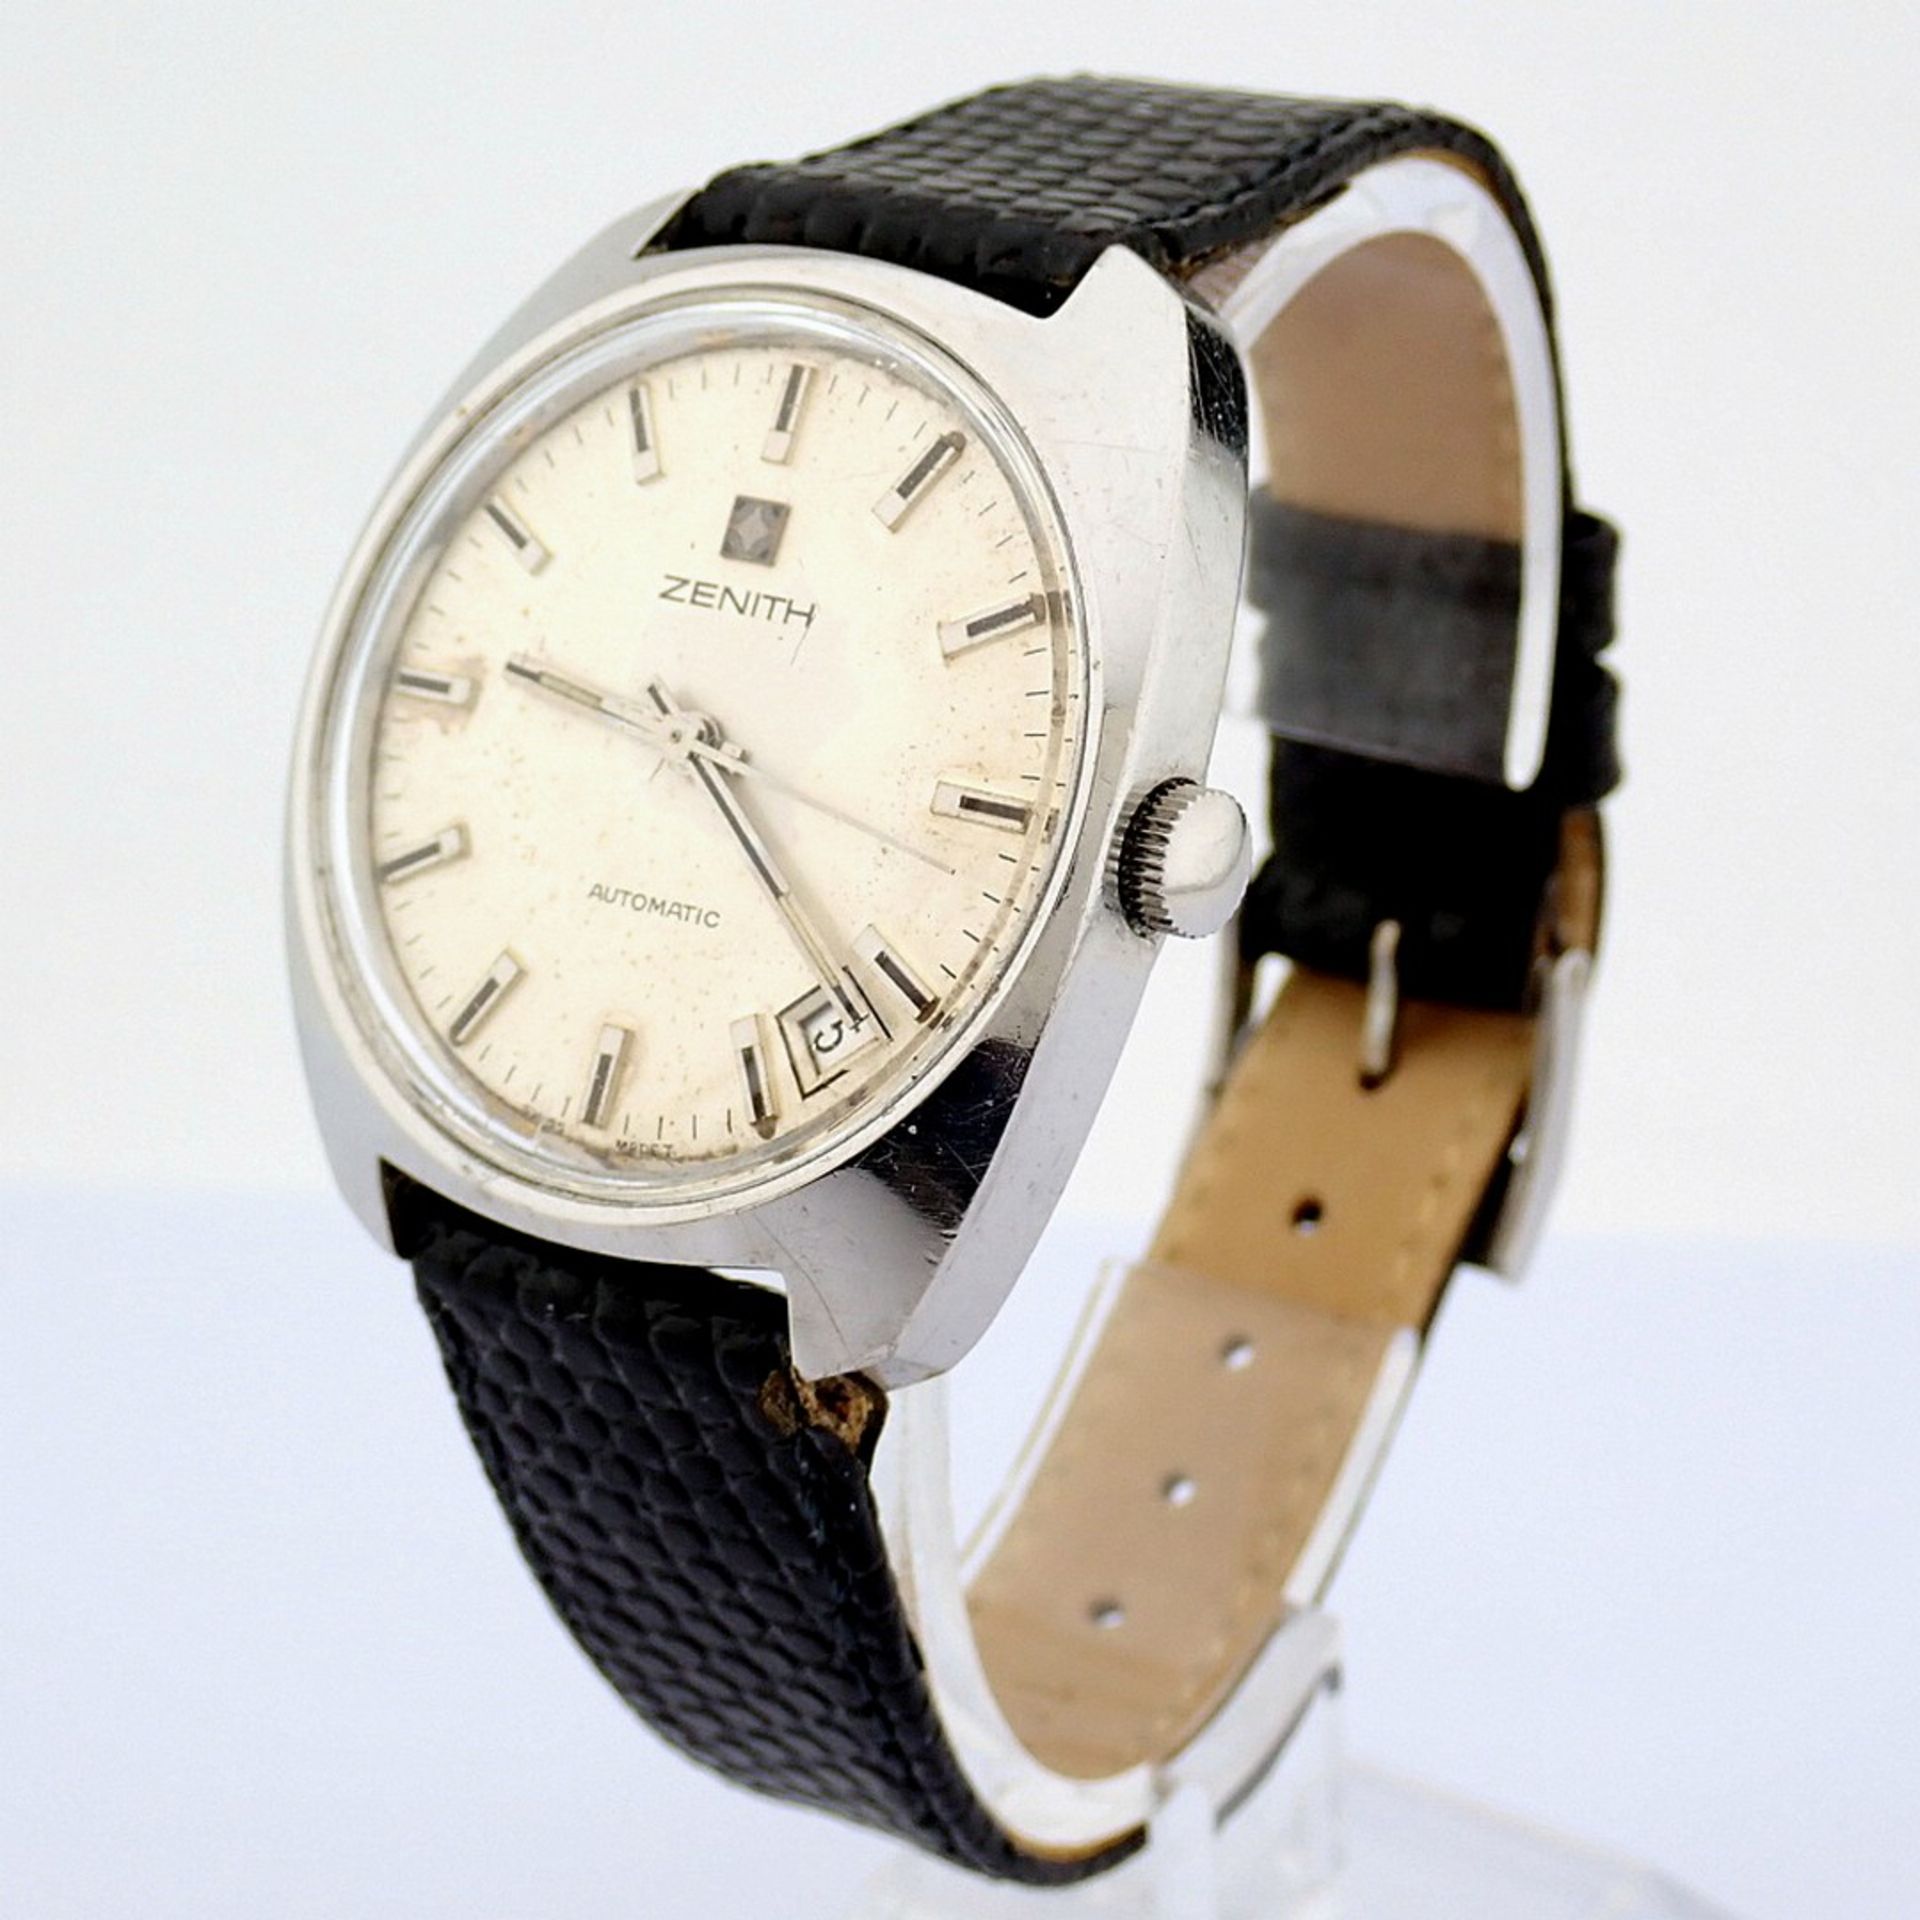 Zenith / Vintage Automatic - Gentlmen's Steel Wrist Watch - Image 5 of 9